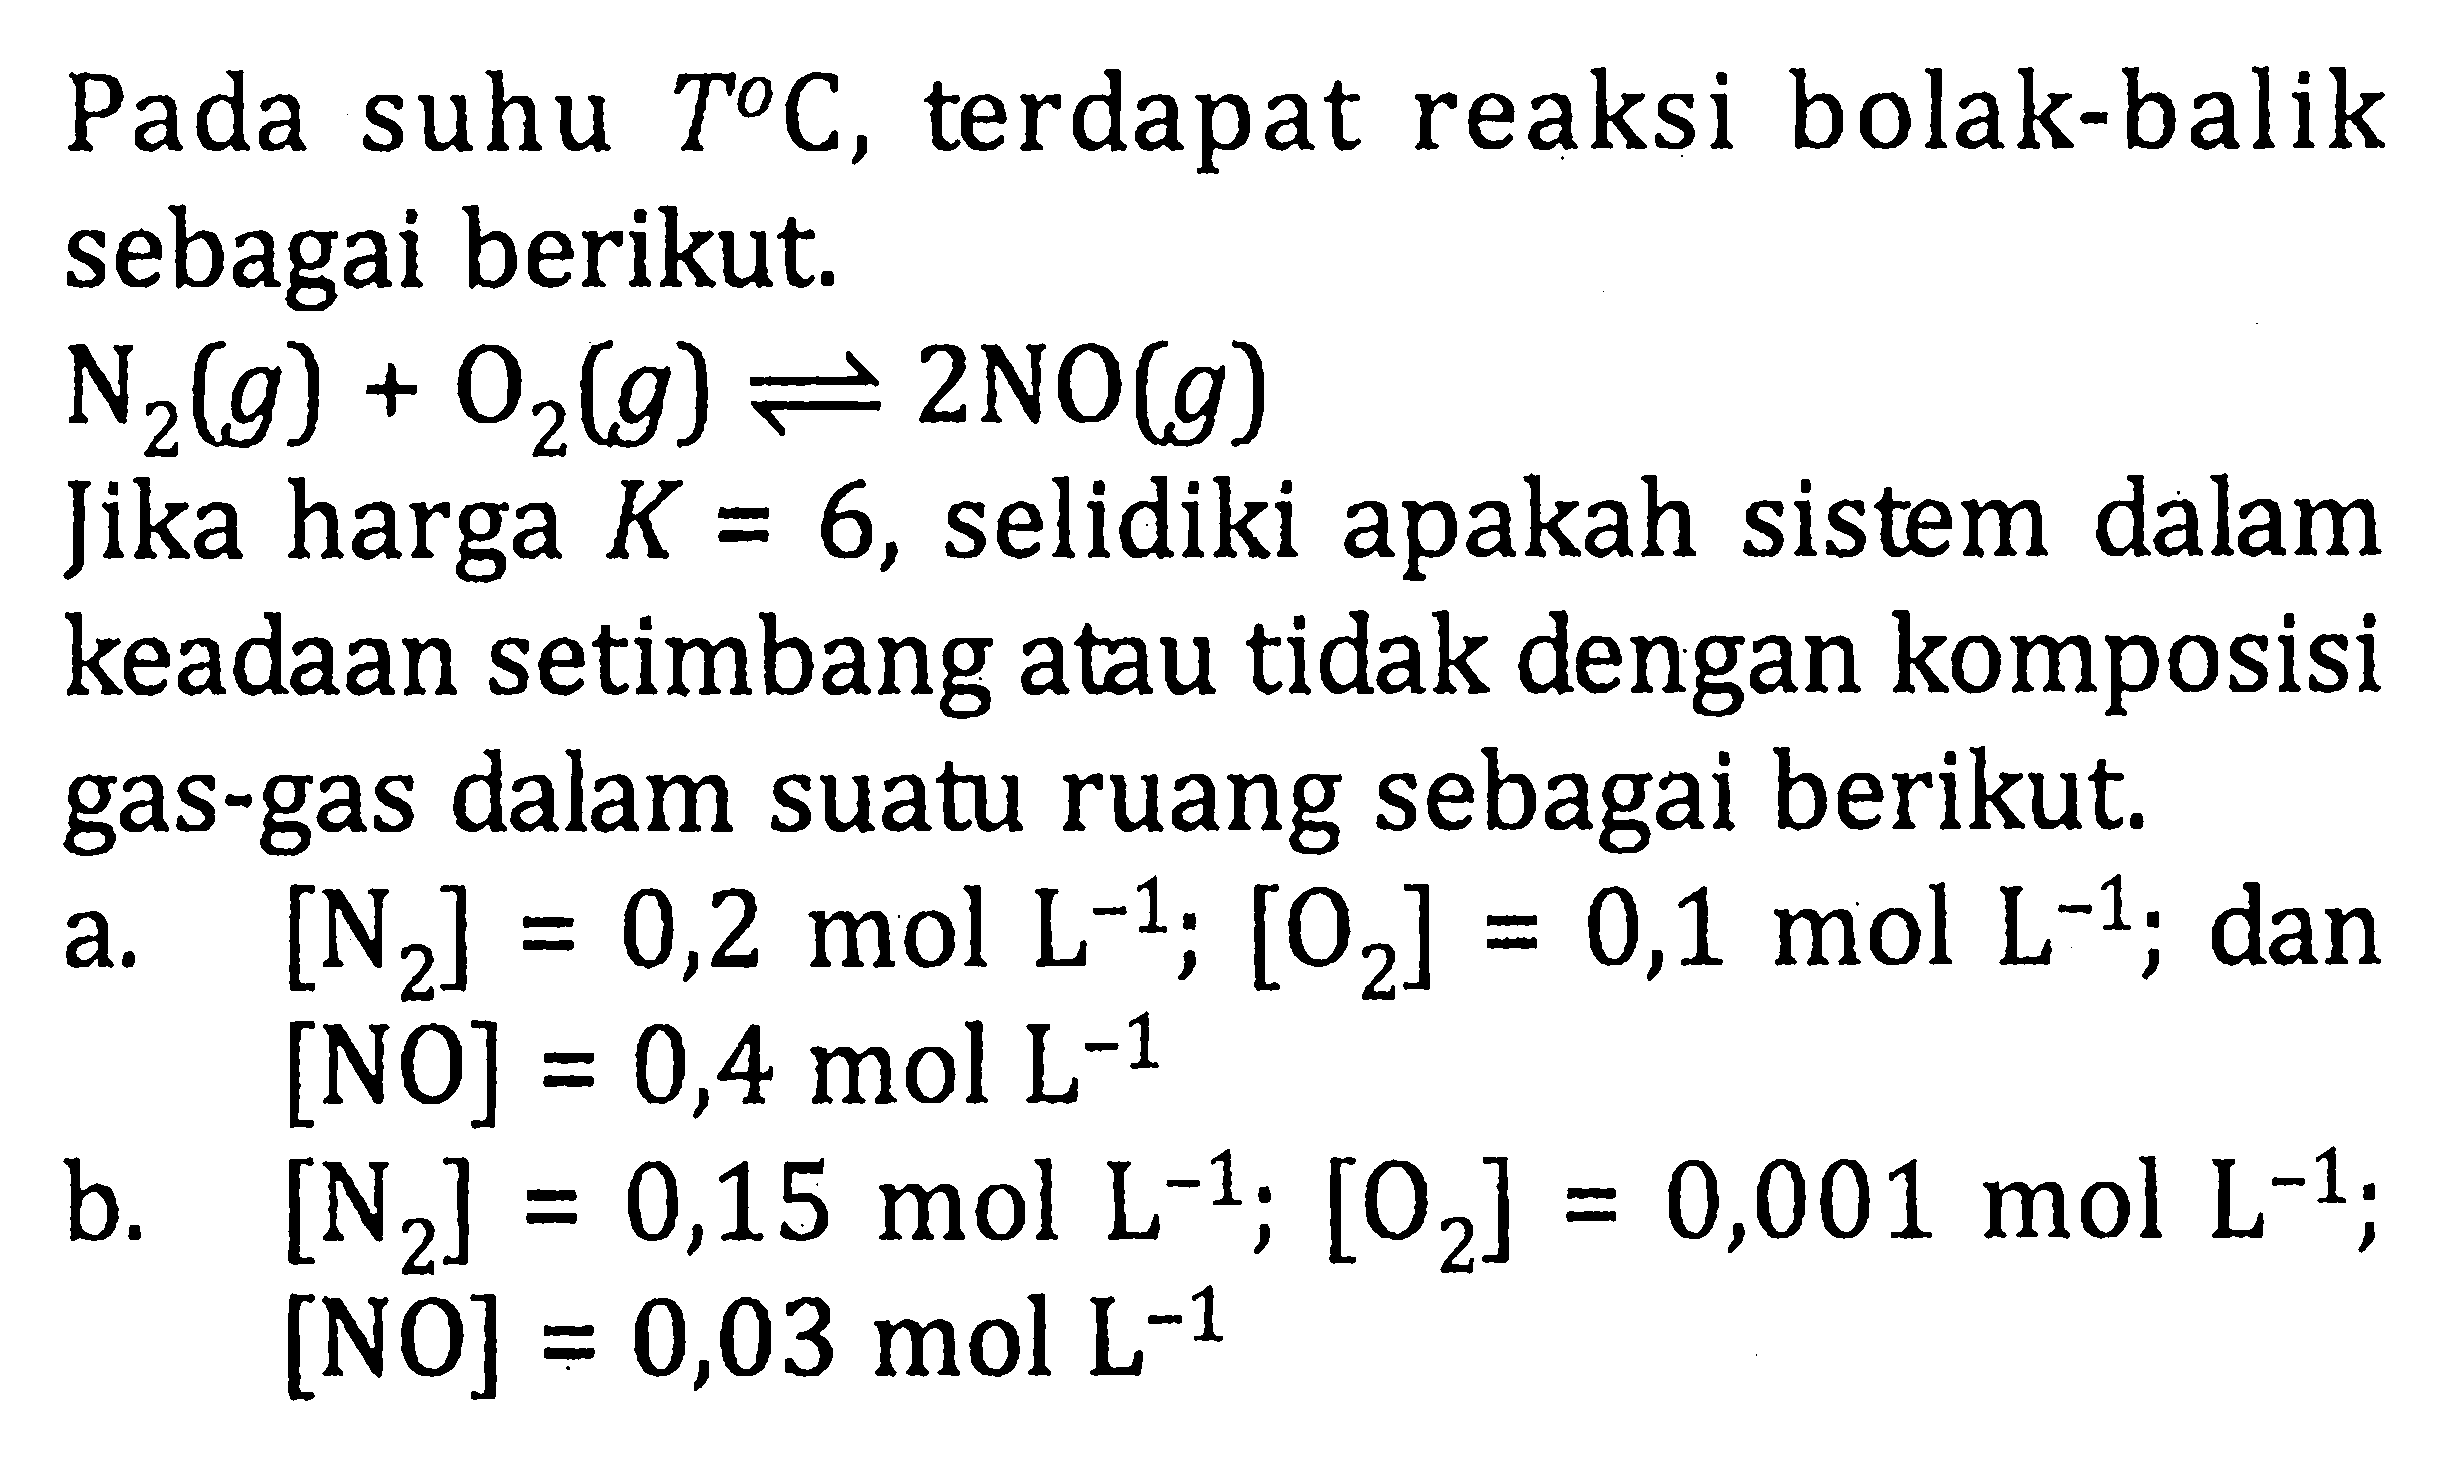 Pada suhu T C, terdapat reaksi bolak-balik sebagai berikut. N2 (g) + O2 (g) <=> 2NO (g) Jika harga K = 6, selidiki apakah sistem dalam keadaan setimbang atau tidak dengan komposisi gas-gas dalam suatu ruang sebagai berikut. a. [N2] = 0,2 mol L^(-1); [O2] = 0,1 mol L^(-1); dan [NO] = 0,4 mol L^(-1) b. [N2] = 0,15 mol L^(-1); [O2] = 0,001 mol L^(-1); [NO] = 0,03 mol L^(-1)